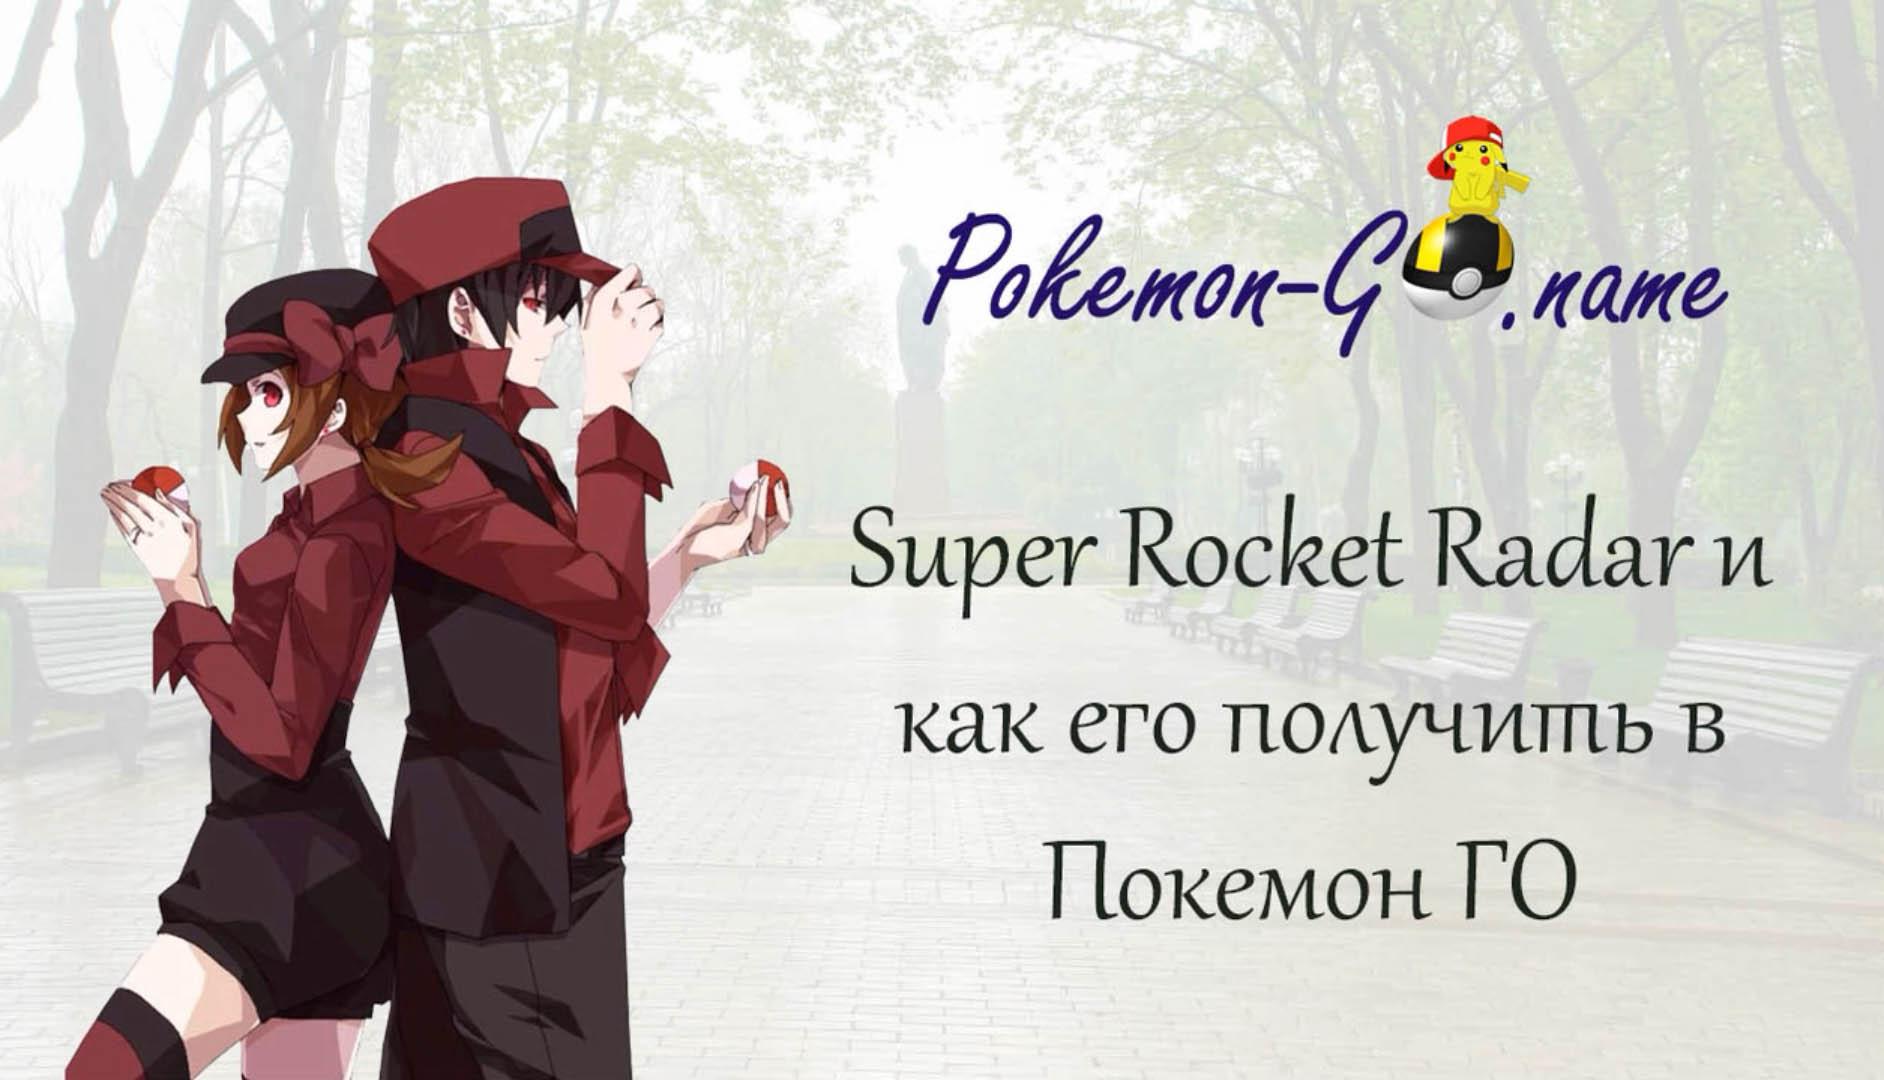 Super Rocket Radar in Pokémon GO - Super Rocket Radar